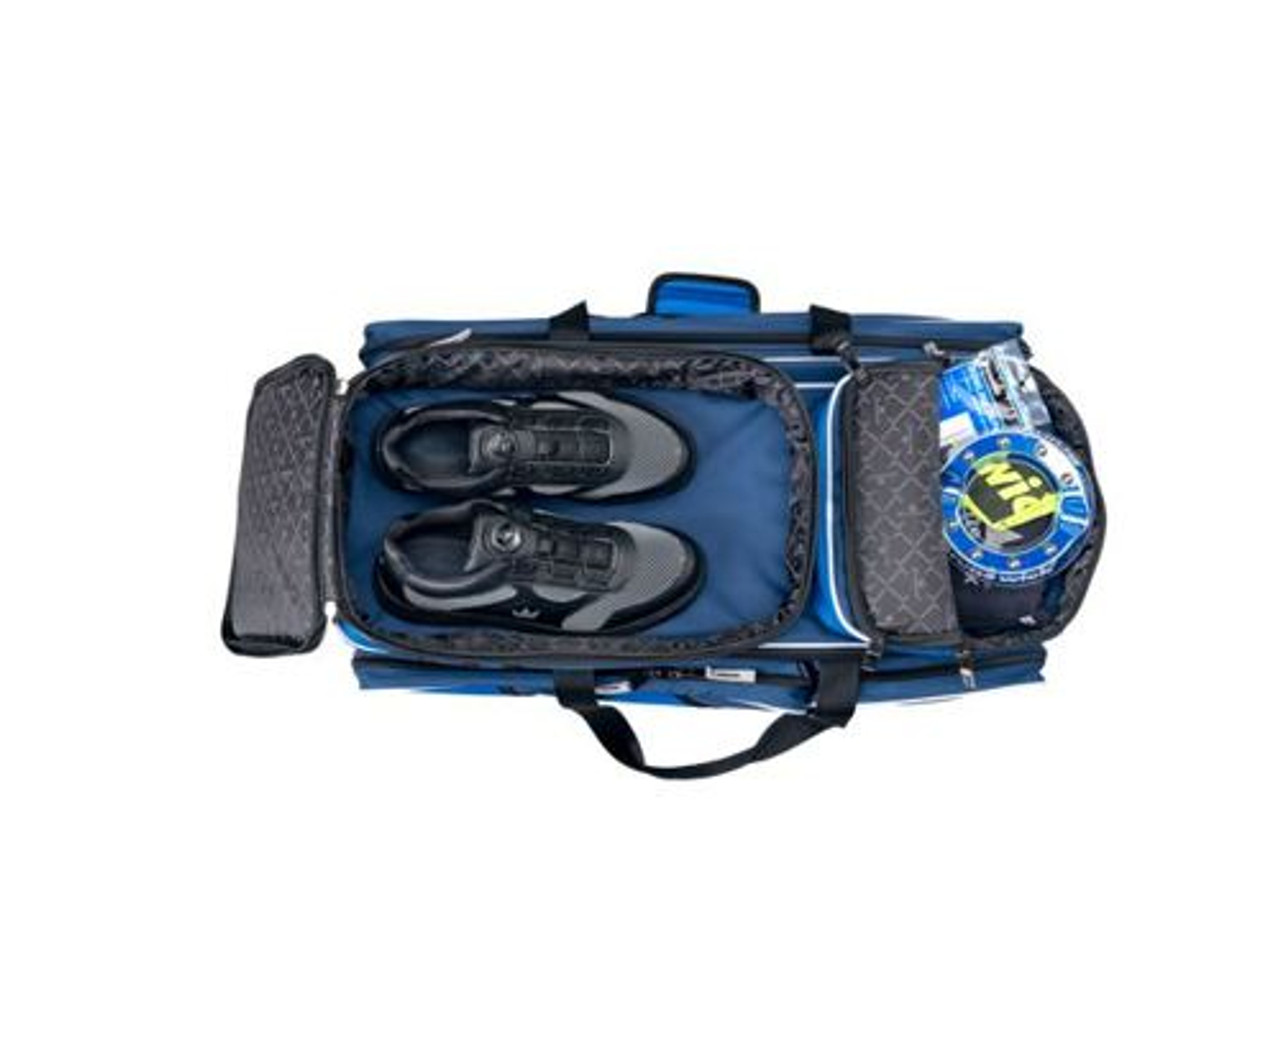 Brunswick Edge Triple Roller - Blue Bowling Bag